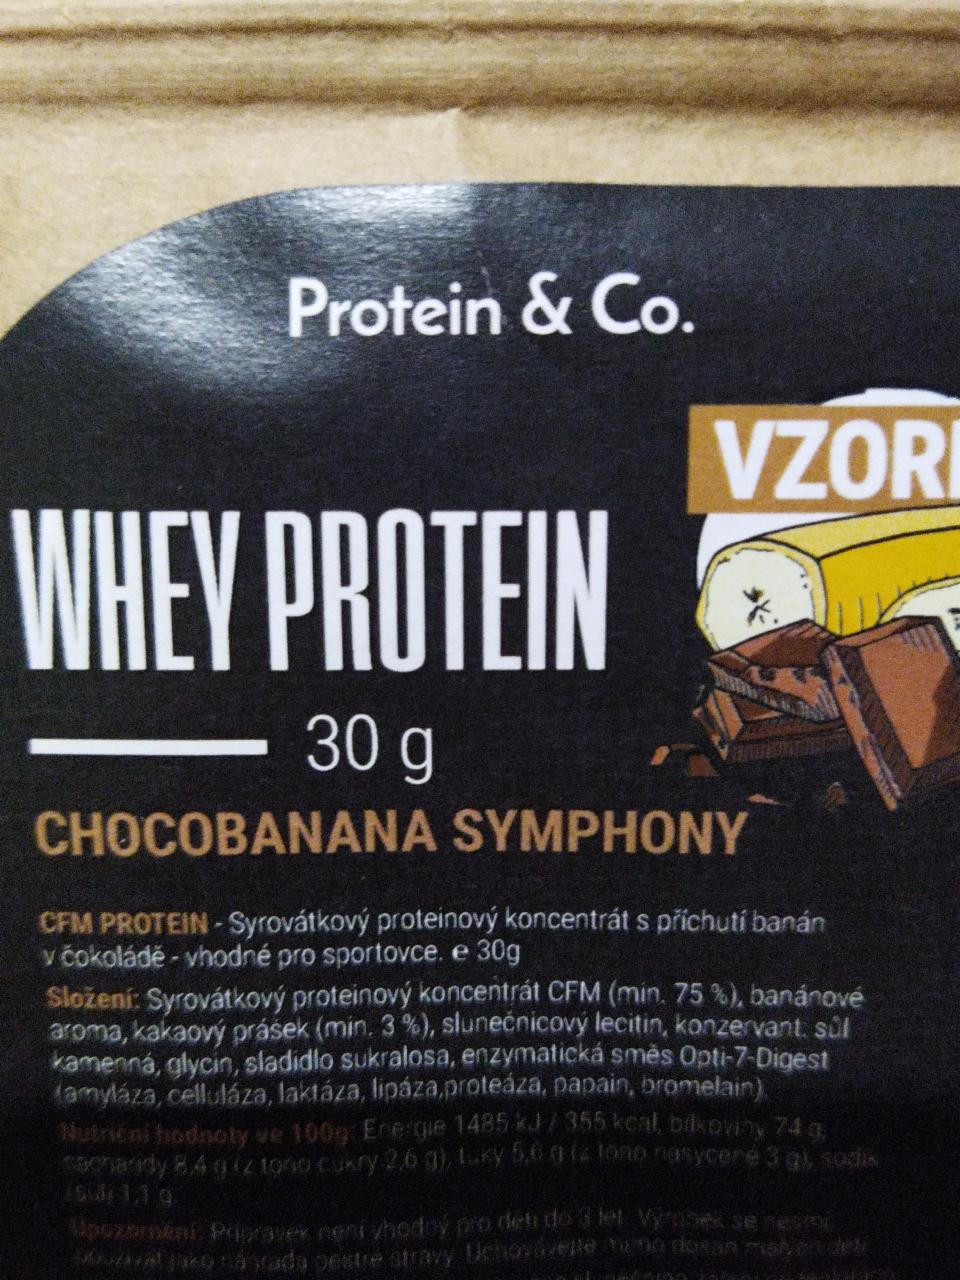 Fotografie - Whey protein chocobanana symphony Protein & Co.